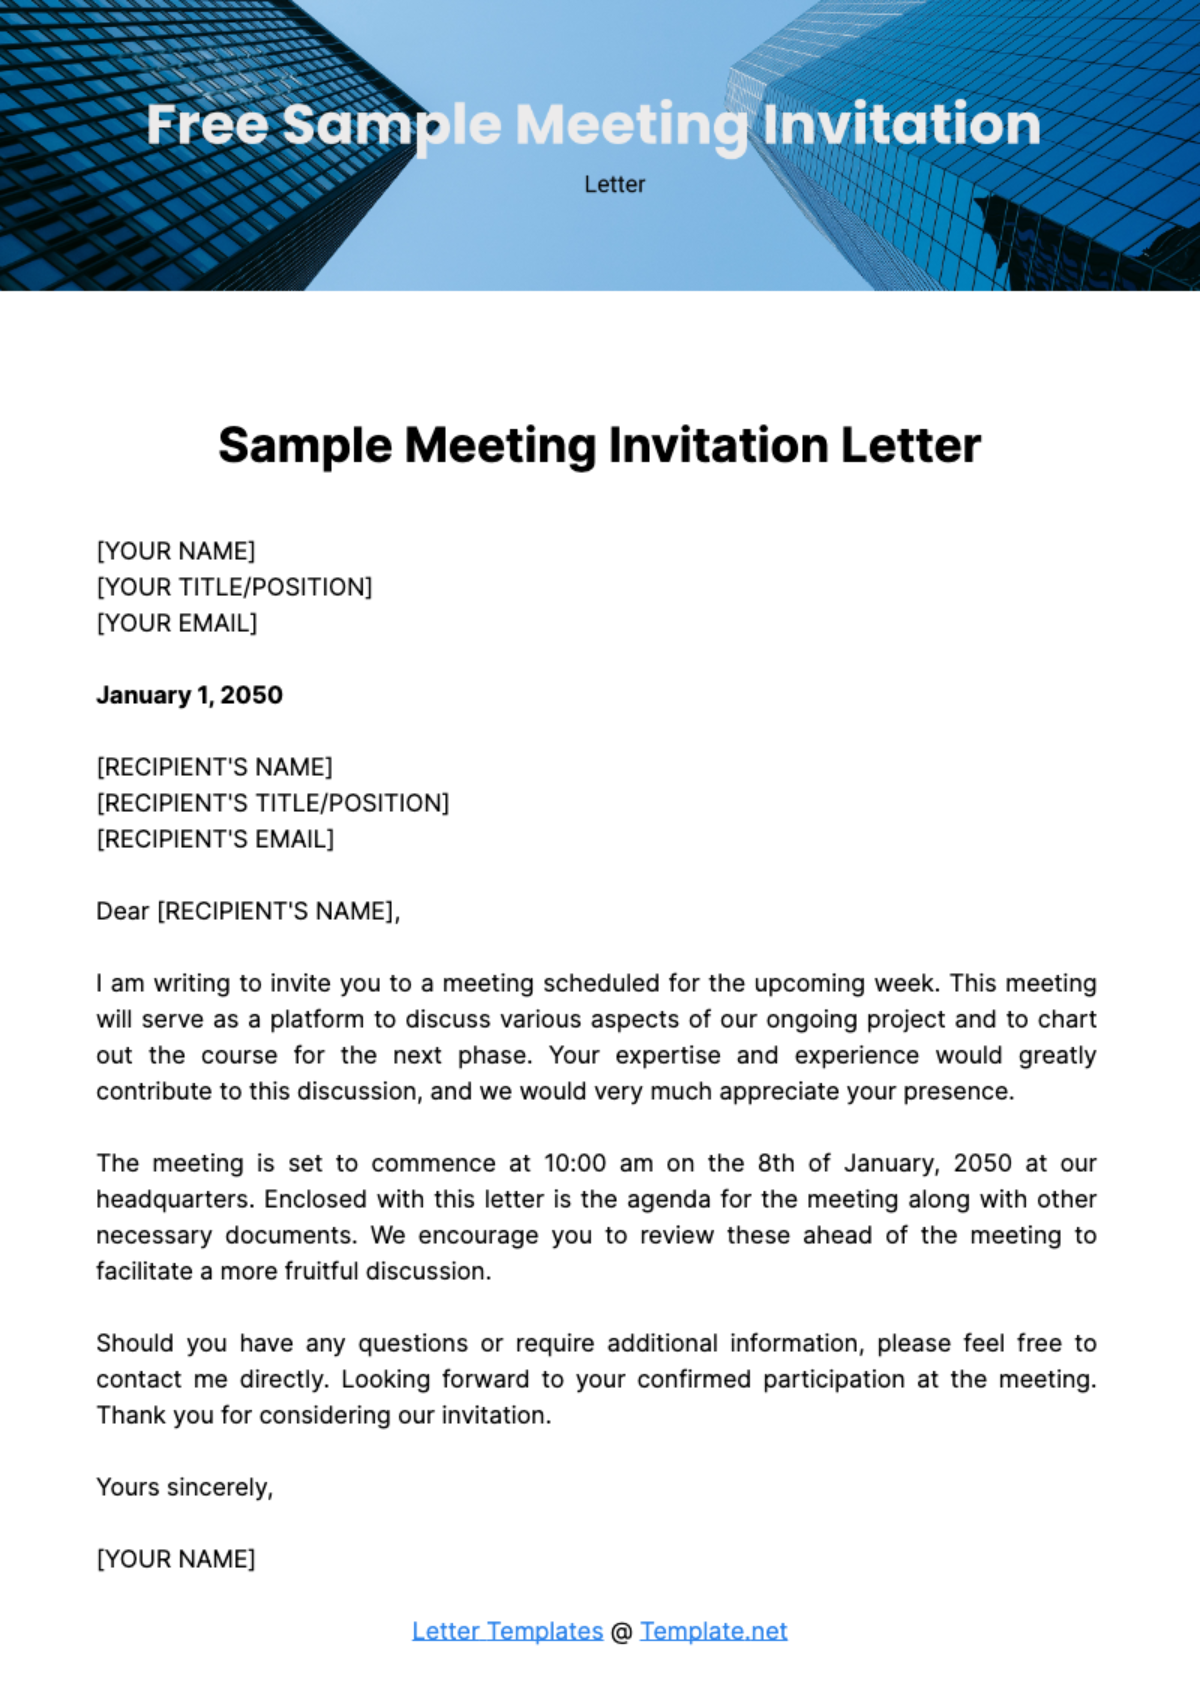 Sample Meeting Invitation Letter Template